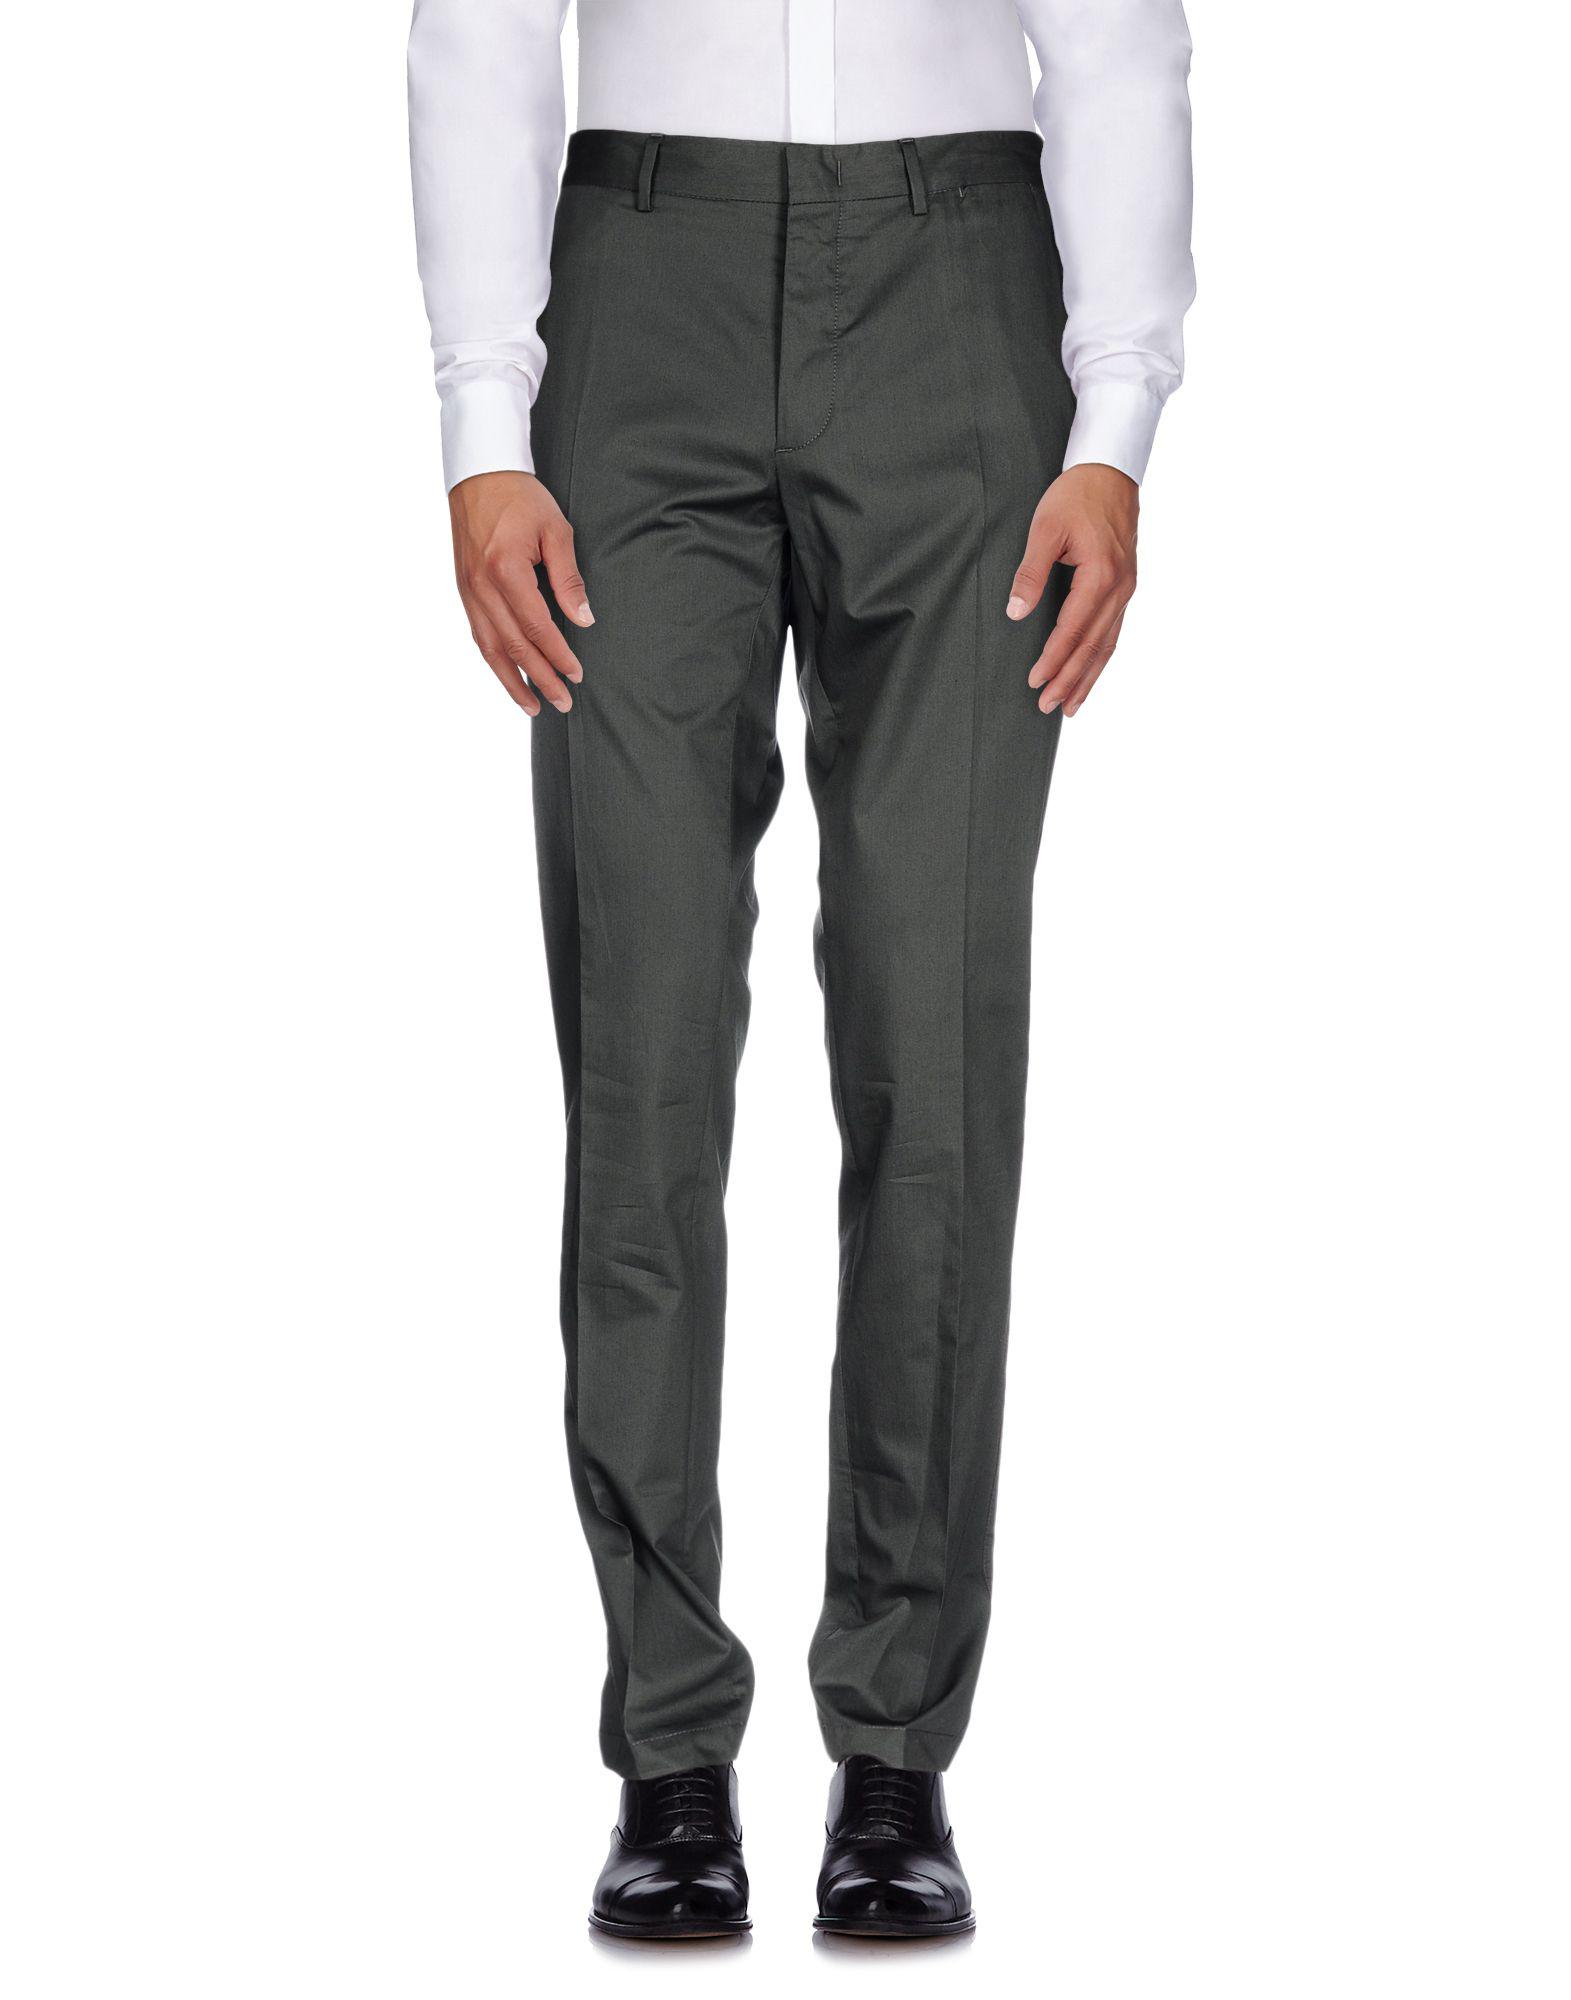 Lyst - Lanvin Casual Trouser in Gray for Men